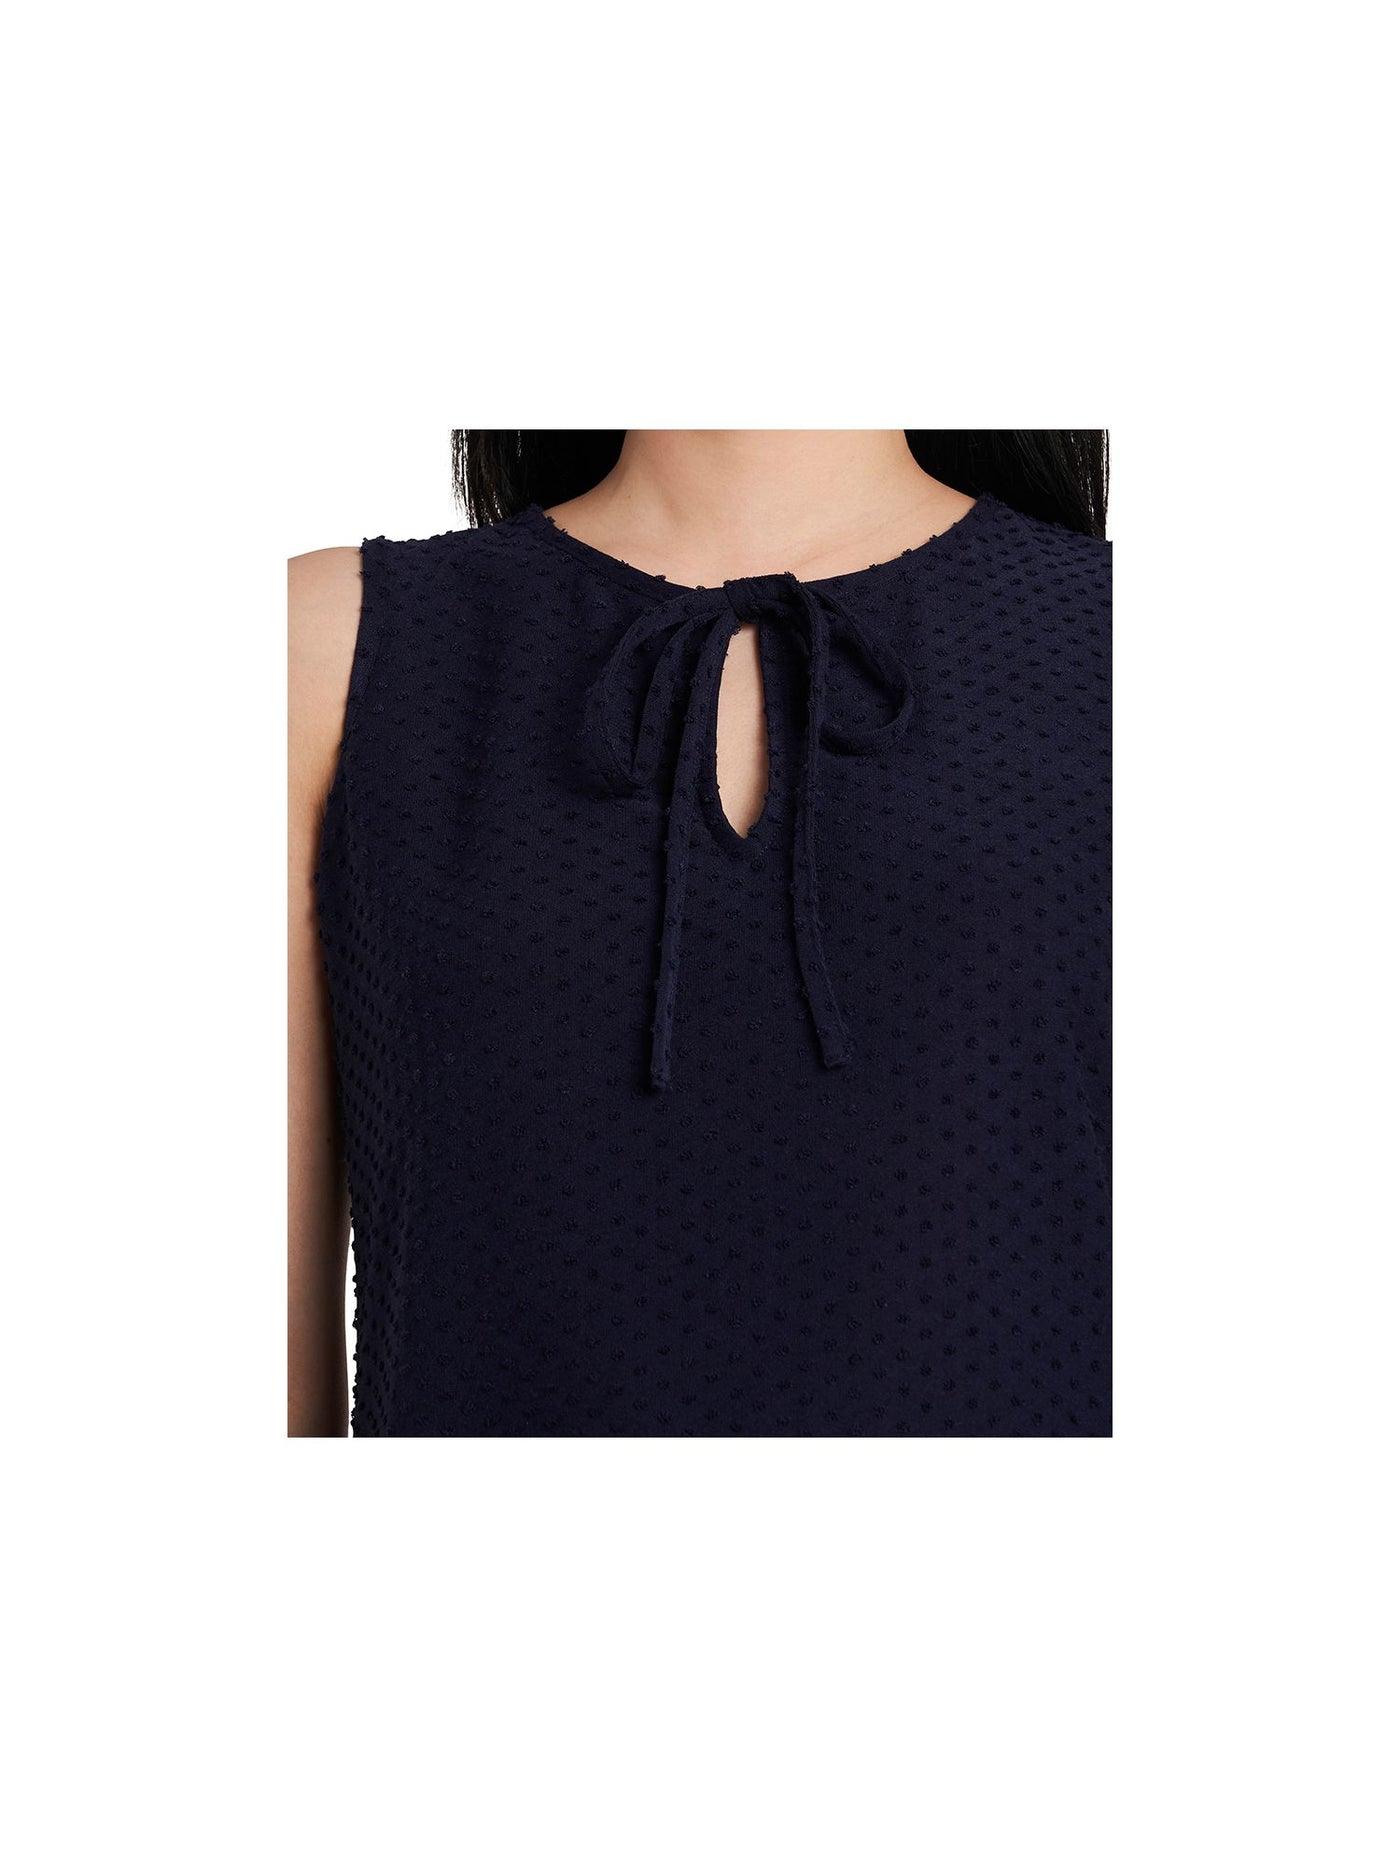 RILEY&RAE Womens Navy Textured Keyhole Neckline With Tie Detail Sleeveless Wear To Work Top XXL